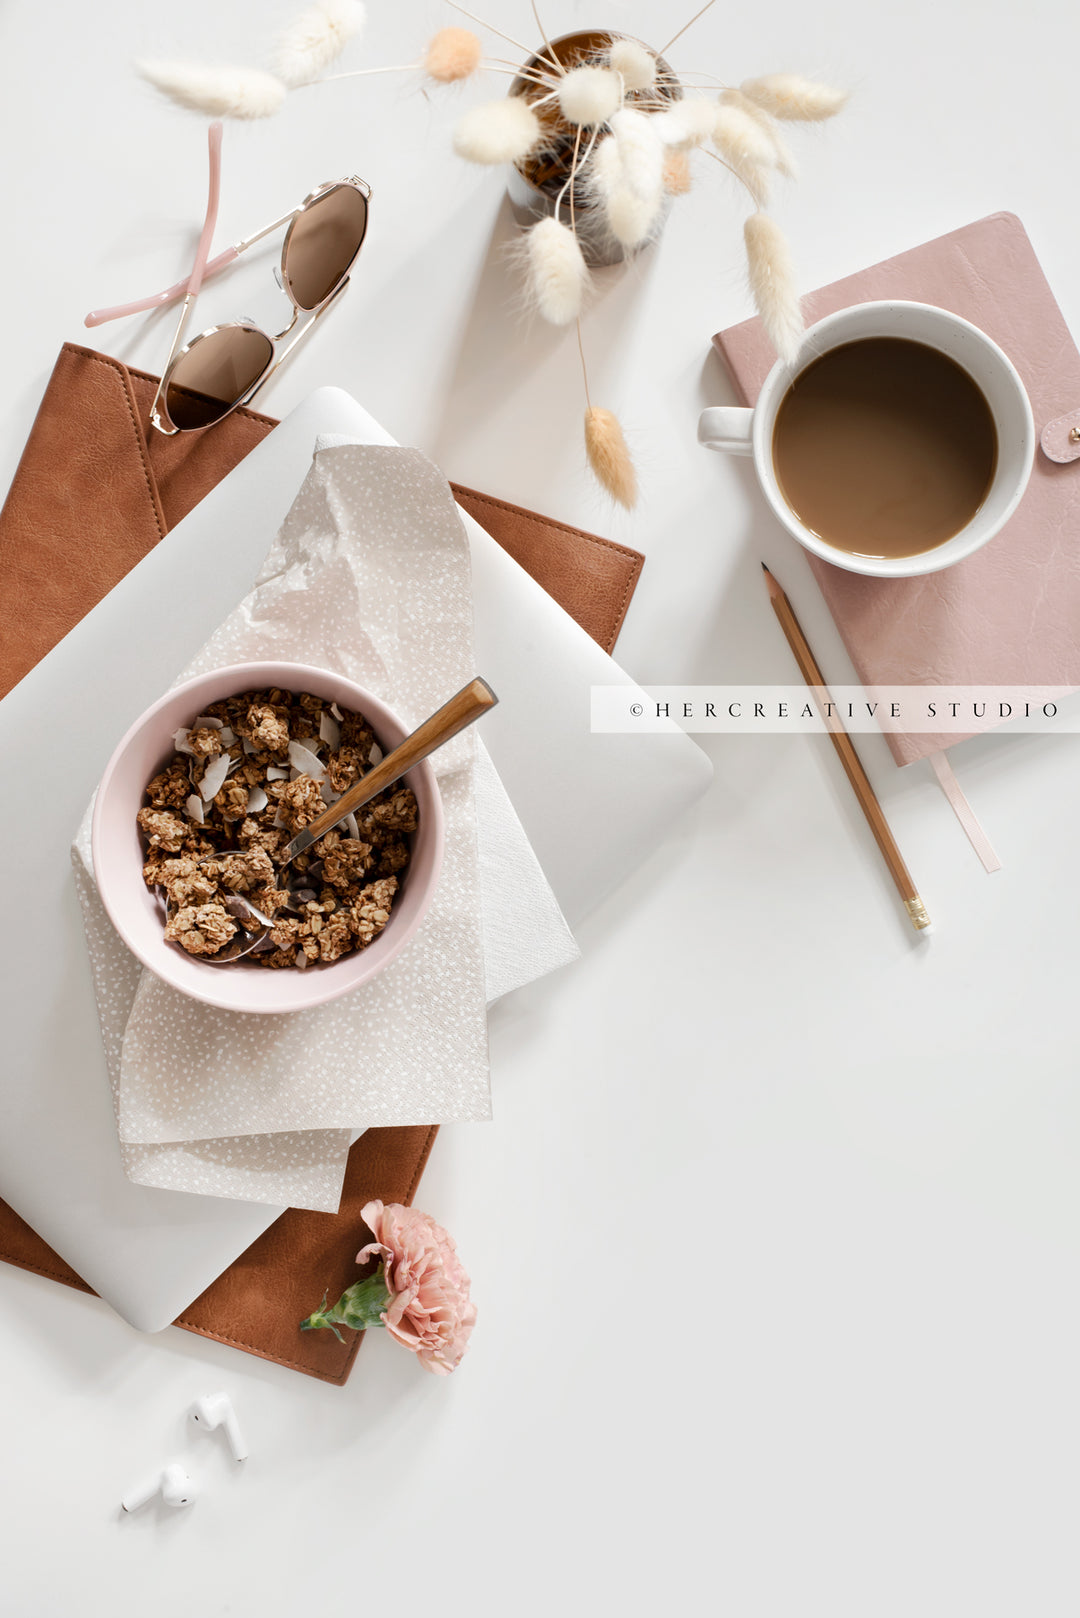 Granola, Laptop & Coffee on White Background. Digital Image.